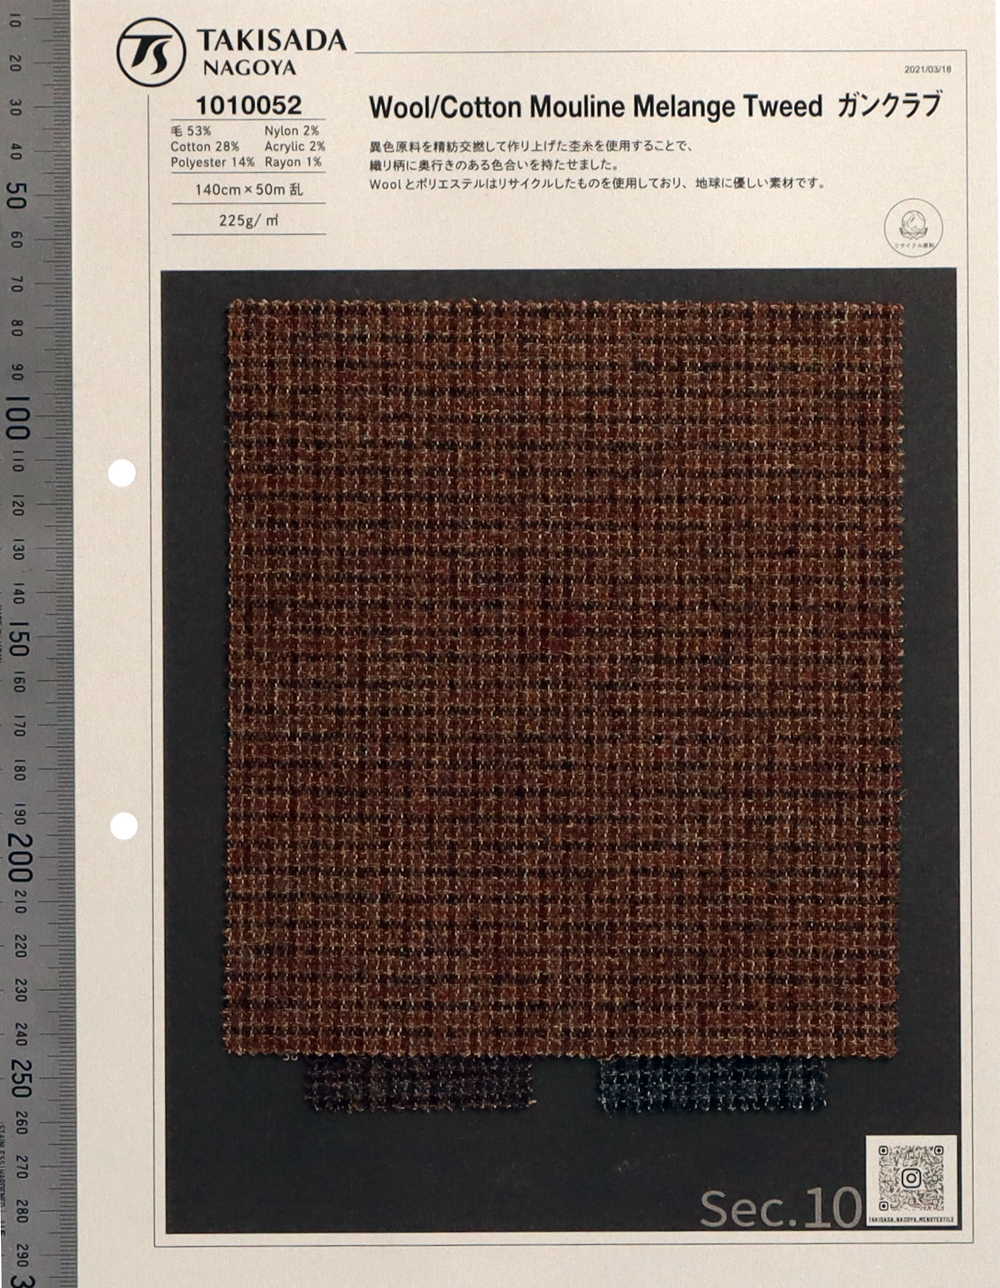 1010052 RE: NEWOOL® Wool / Cotton Melange Tweed Gun Club Check[Textile / Fabric] Takisada Nagoya